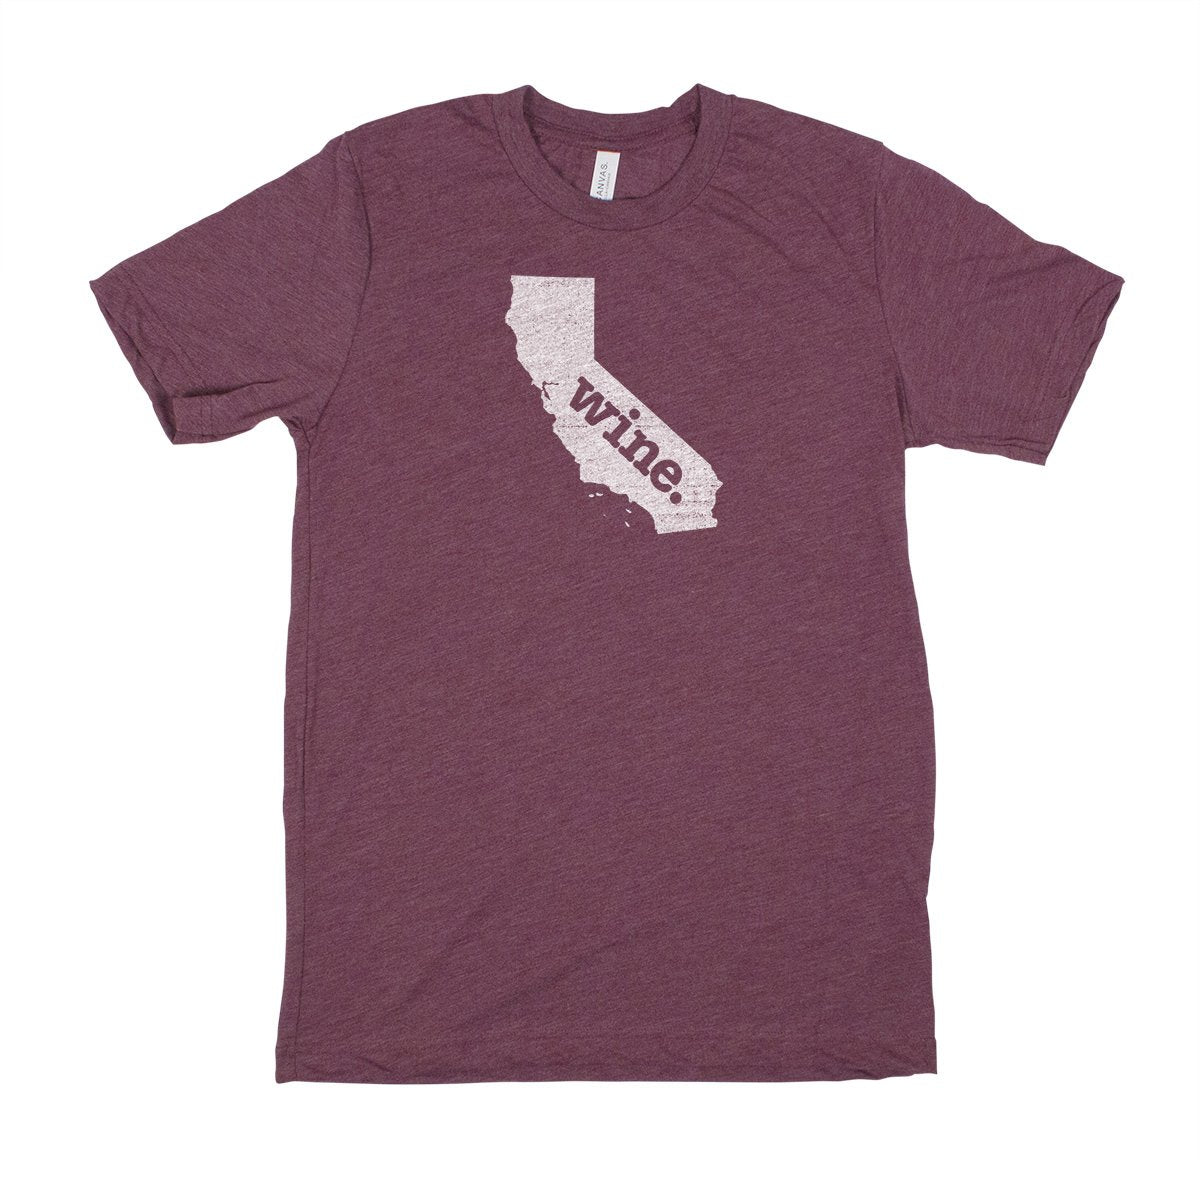 run. Men's Unisex T-Shirt - Kansas